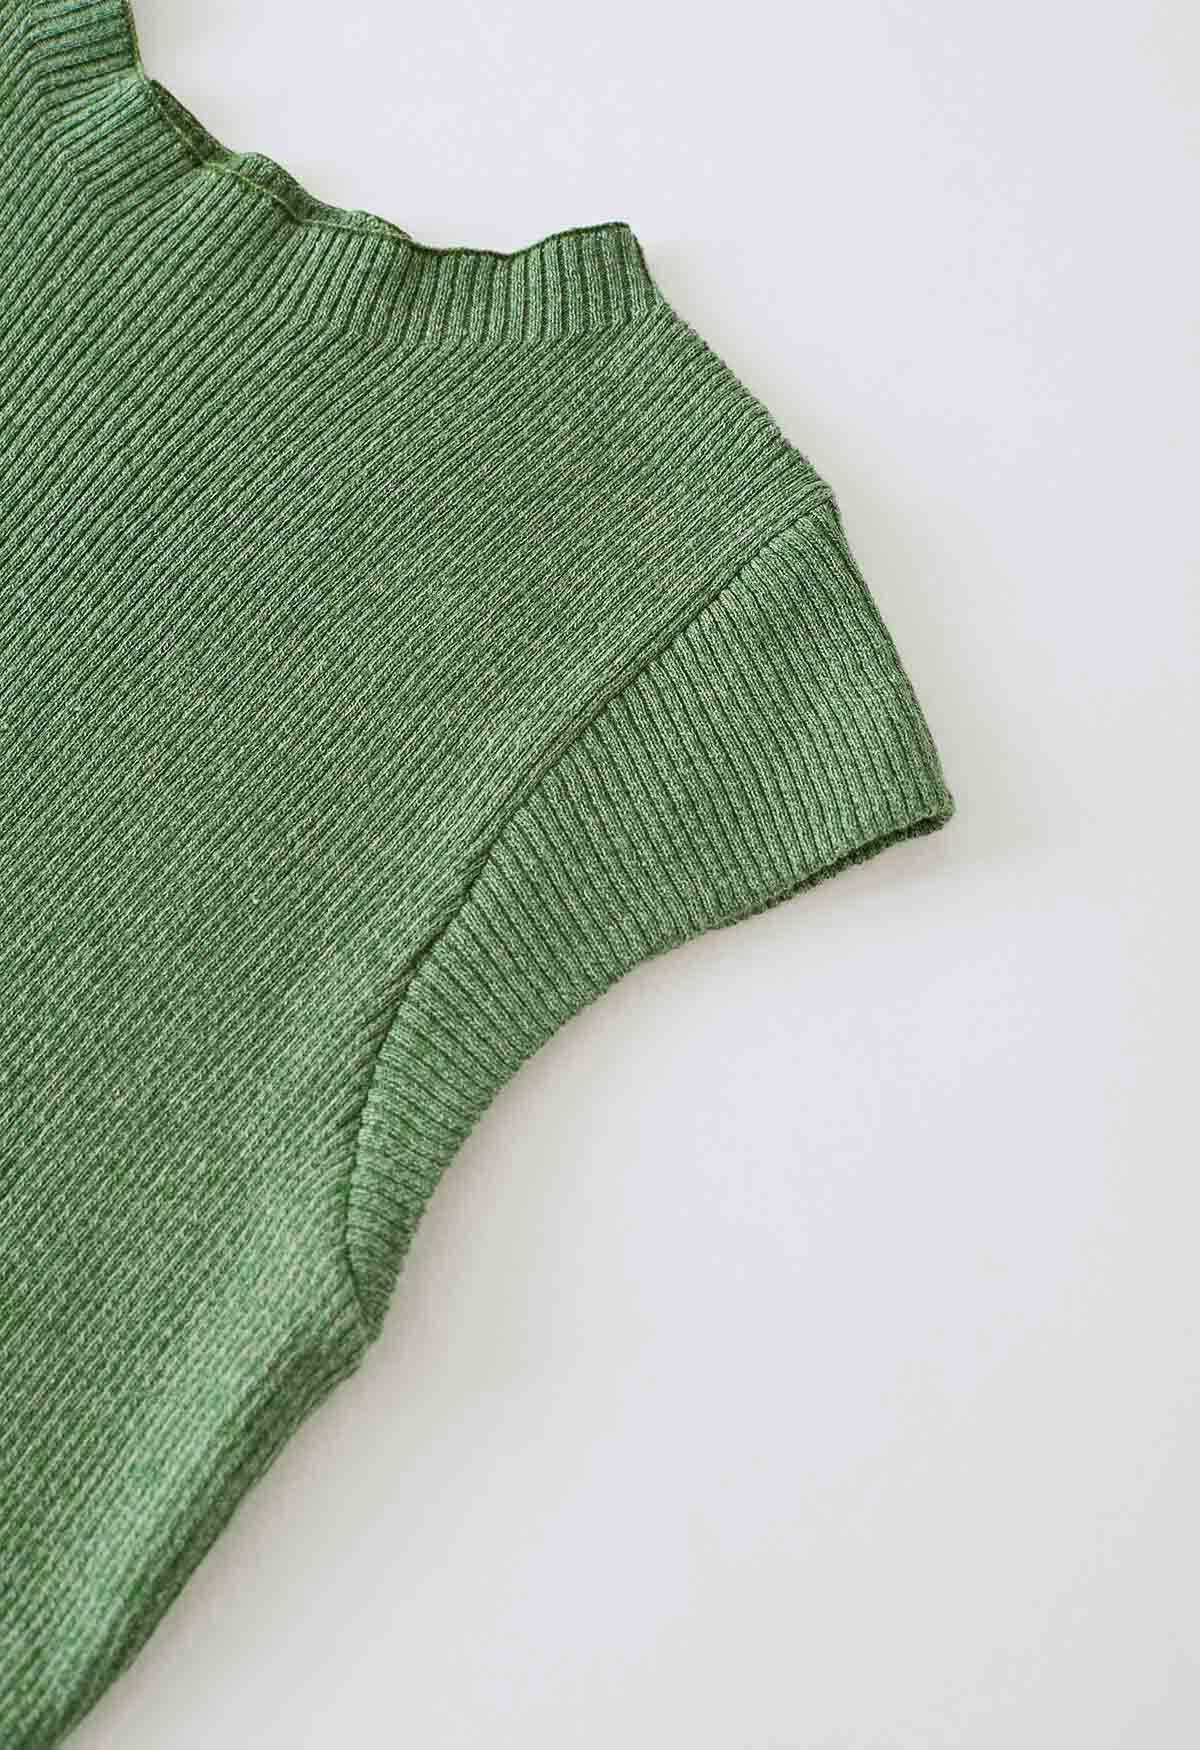 Back Drawstring Sleeveless Knit Top in Green